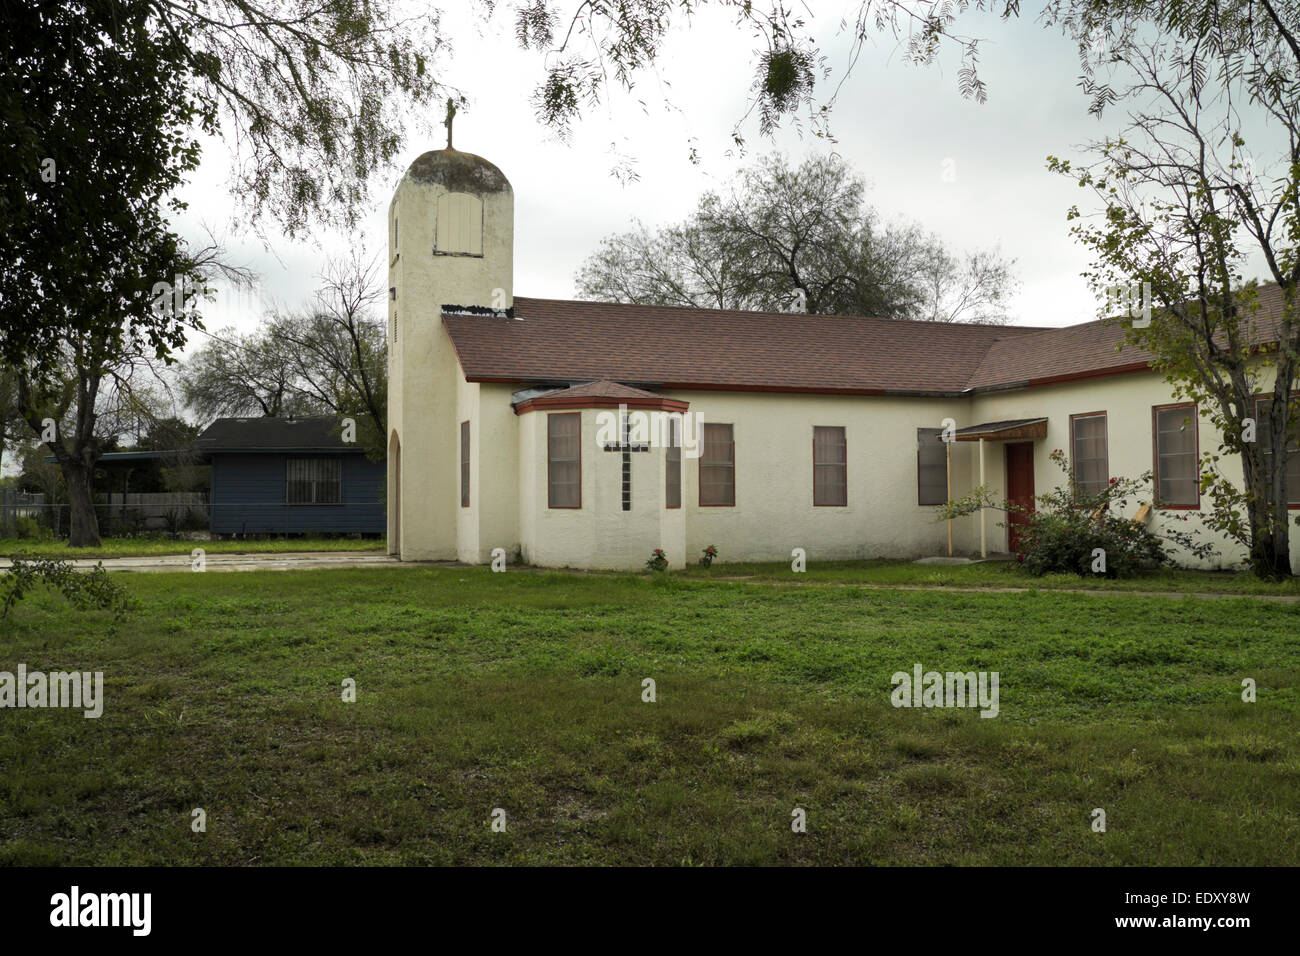 Catholic chapel near the town of Abram in south Texas near the Rio Grande River. Stock Photo